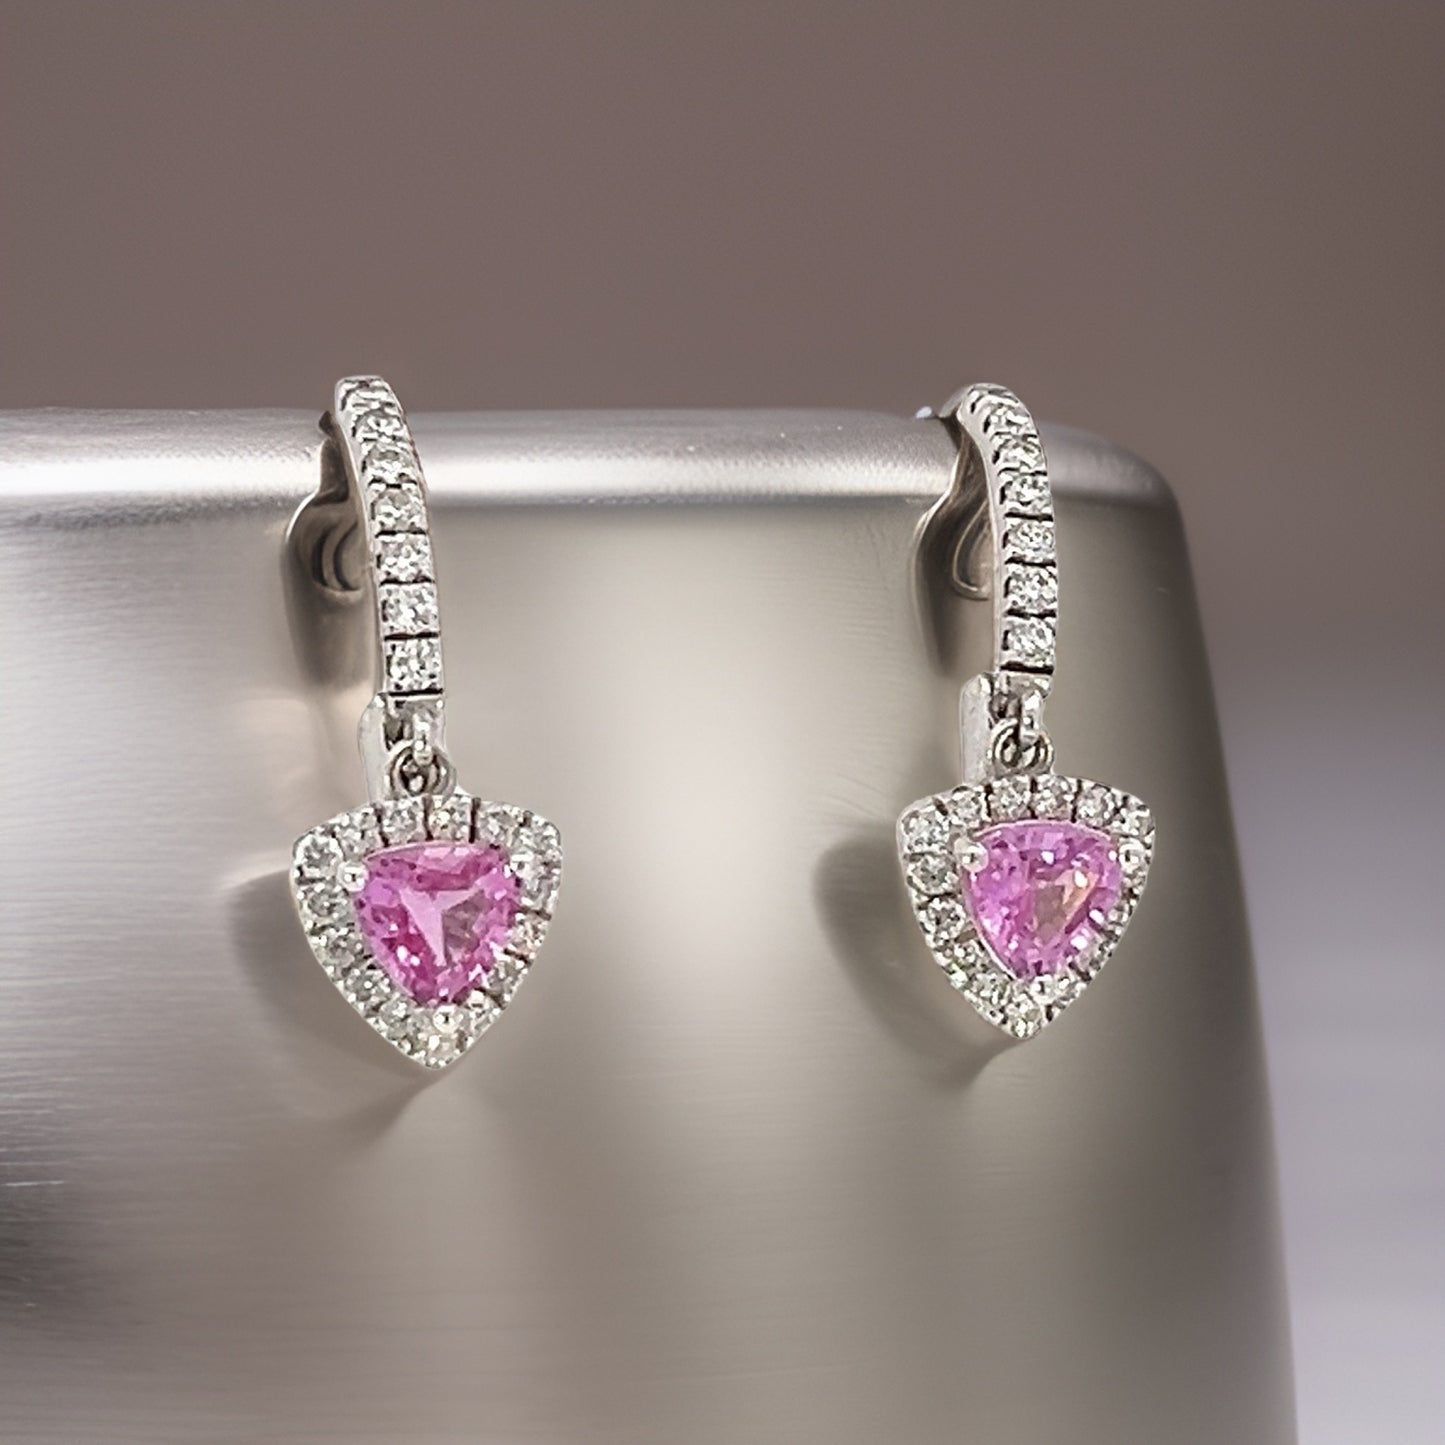 Natural Sapphire Diamond Earrings 14k W Gold 2.01 TCW Certified $3,950 307916